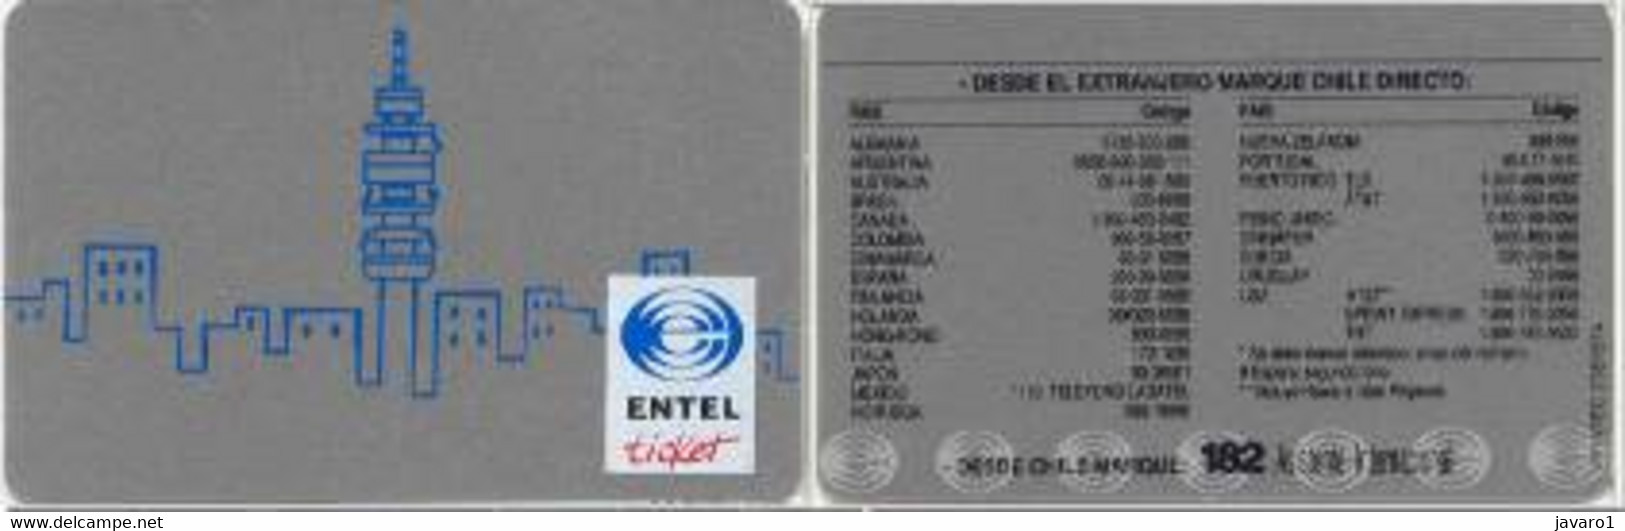 CHILI : CHLREM1 Radio Tower ENTEL TICKET (access Codes) USED - Chili